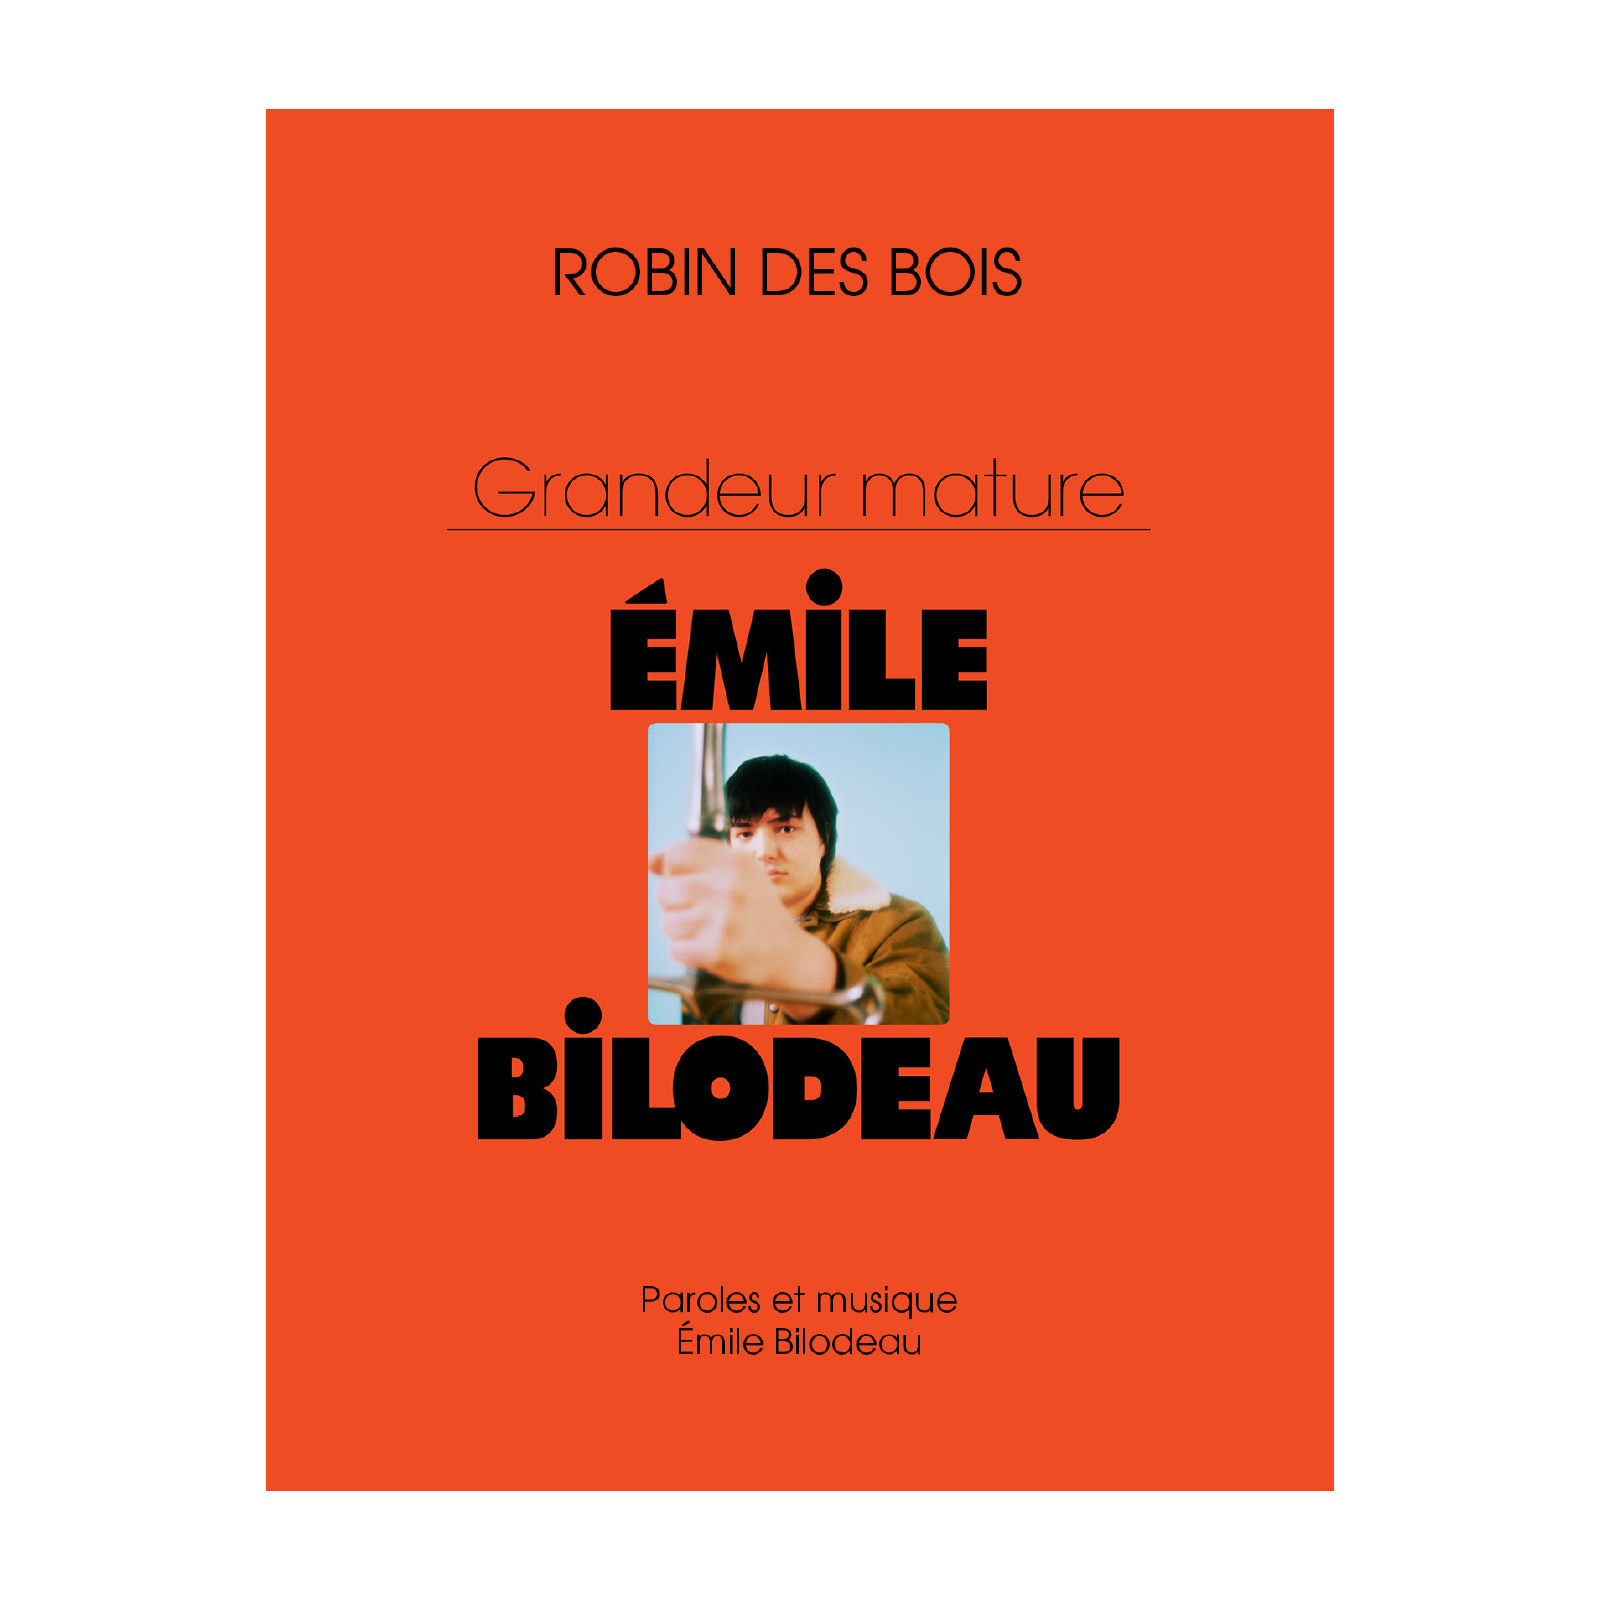 Émile Bilodeau - Guitar score - "Robin Hood"